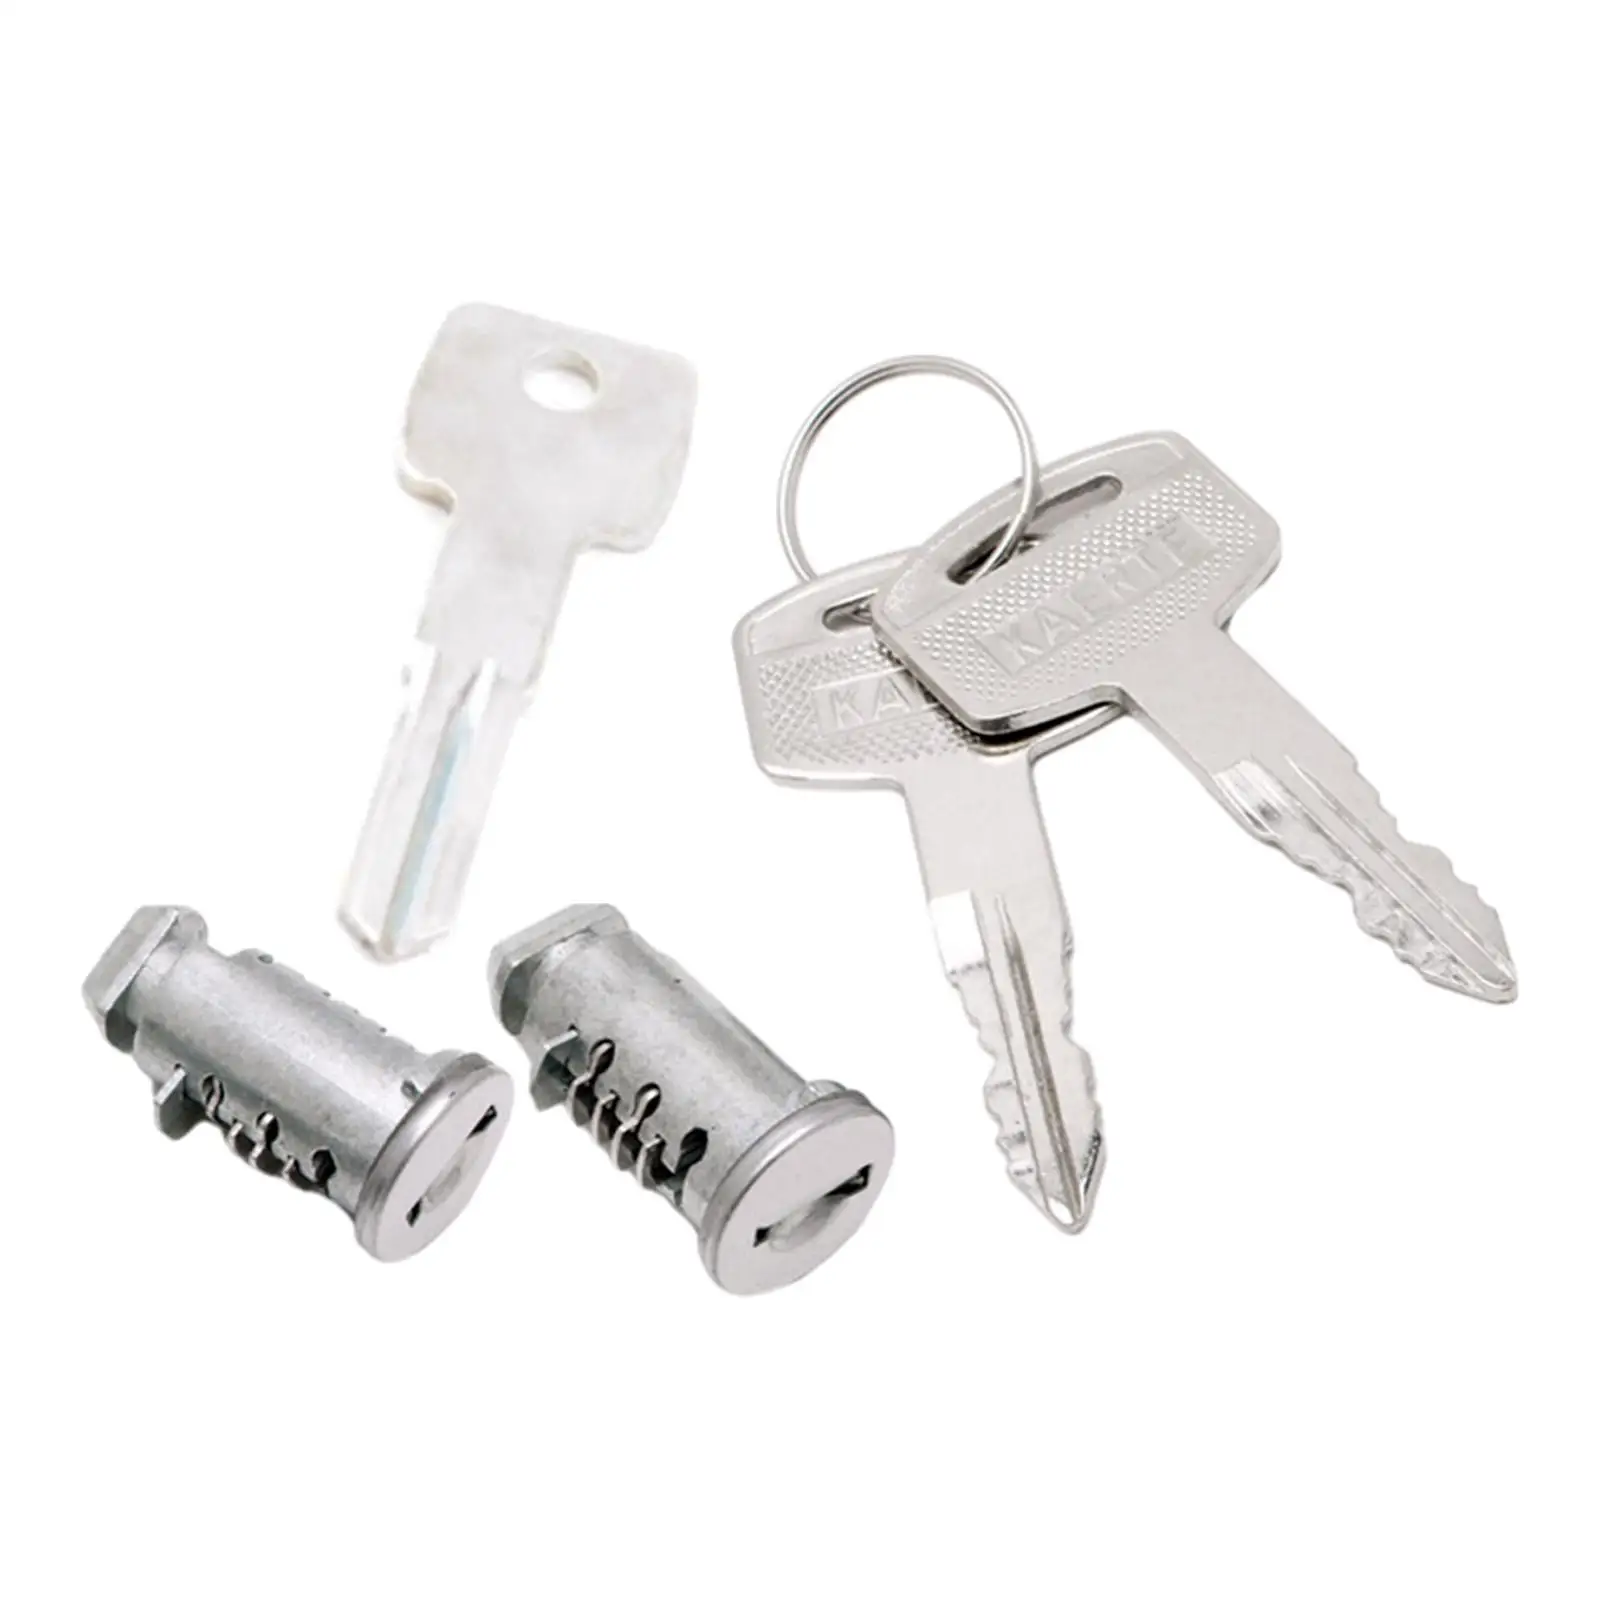 2x Lock Cylinders for Car Racks System Lock Core ,Easy to Install ,Premium, Roof Rack Kit Crossbar Locks for Car Rack Locks